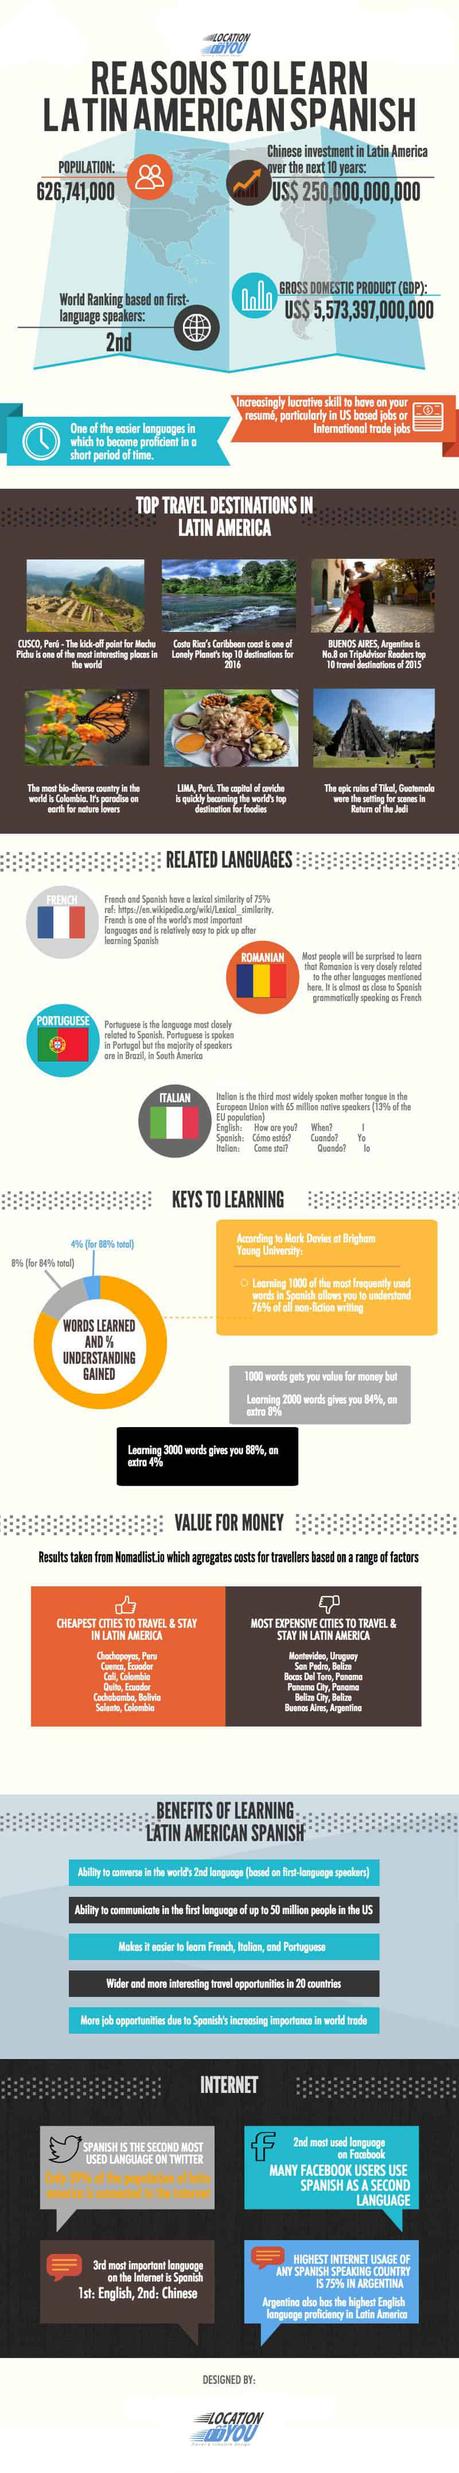 Top 10 reasons to learn Latin American Spanish